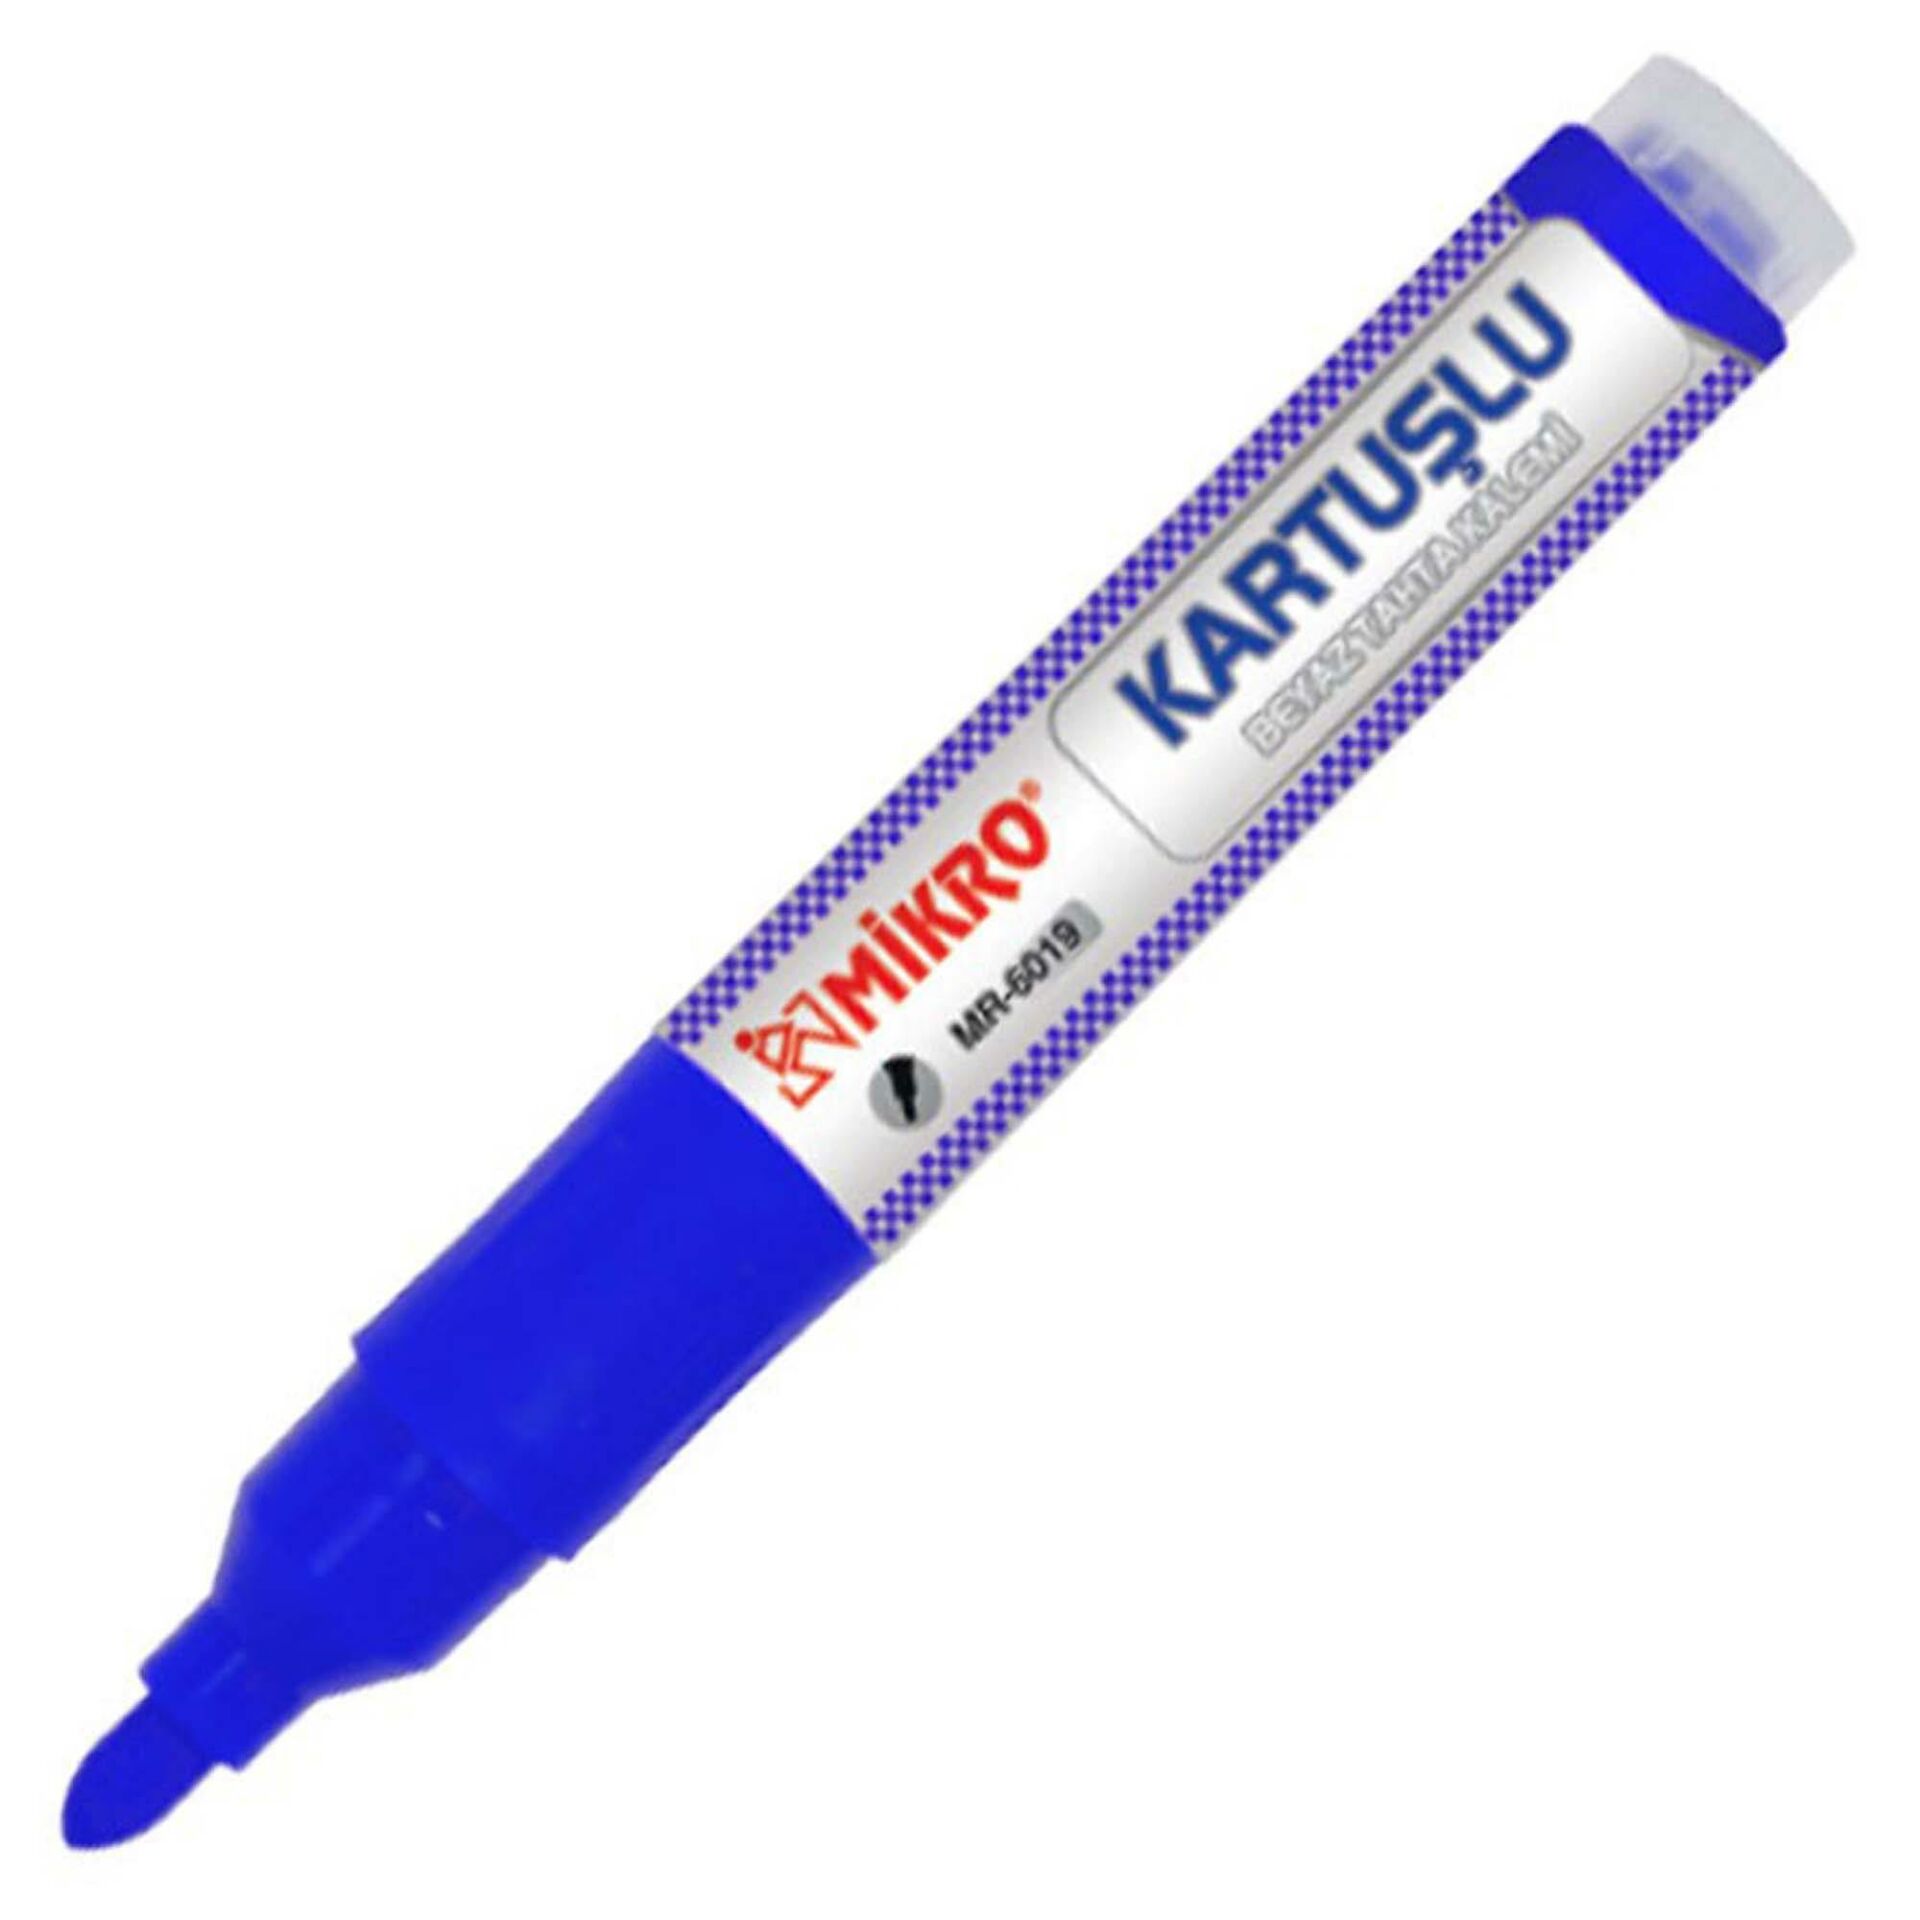 Tahta Kalemı Kartuslu Mavi Mıkro Mr-6019